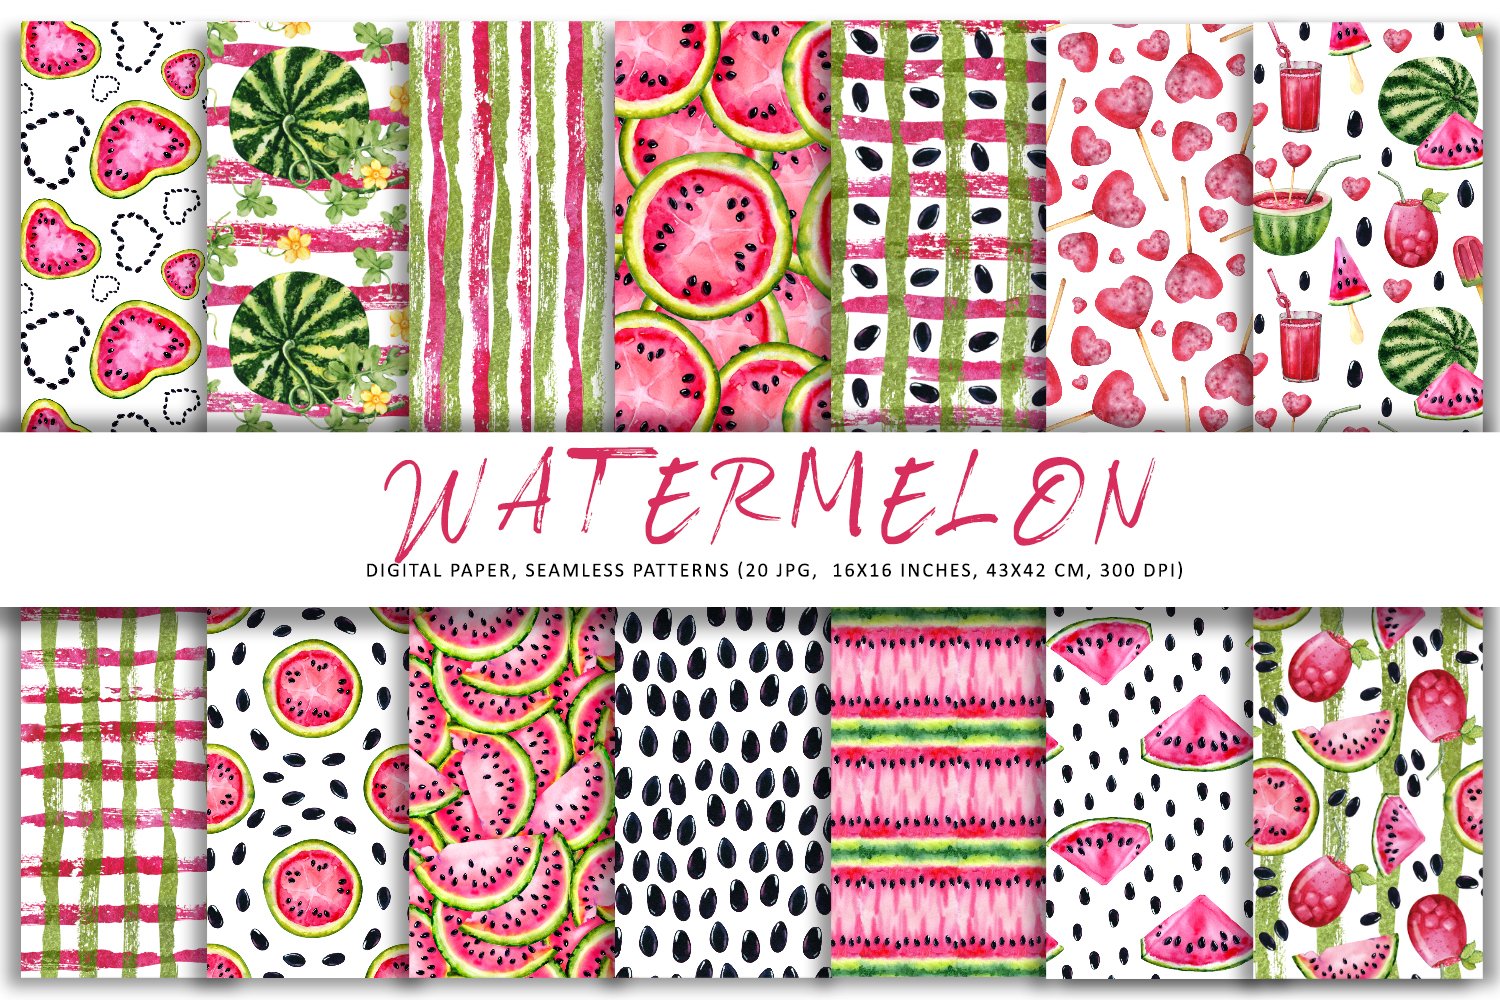 Cover image of Watercolor watermelon digital paper.